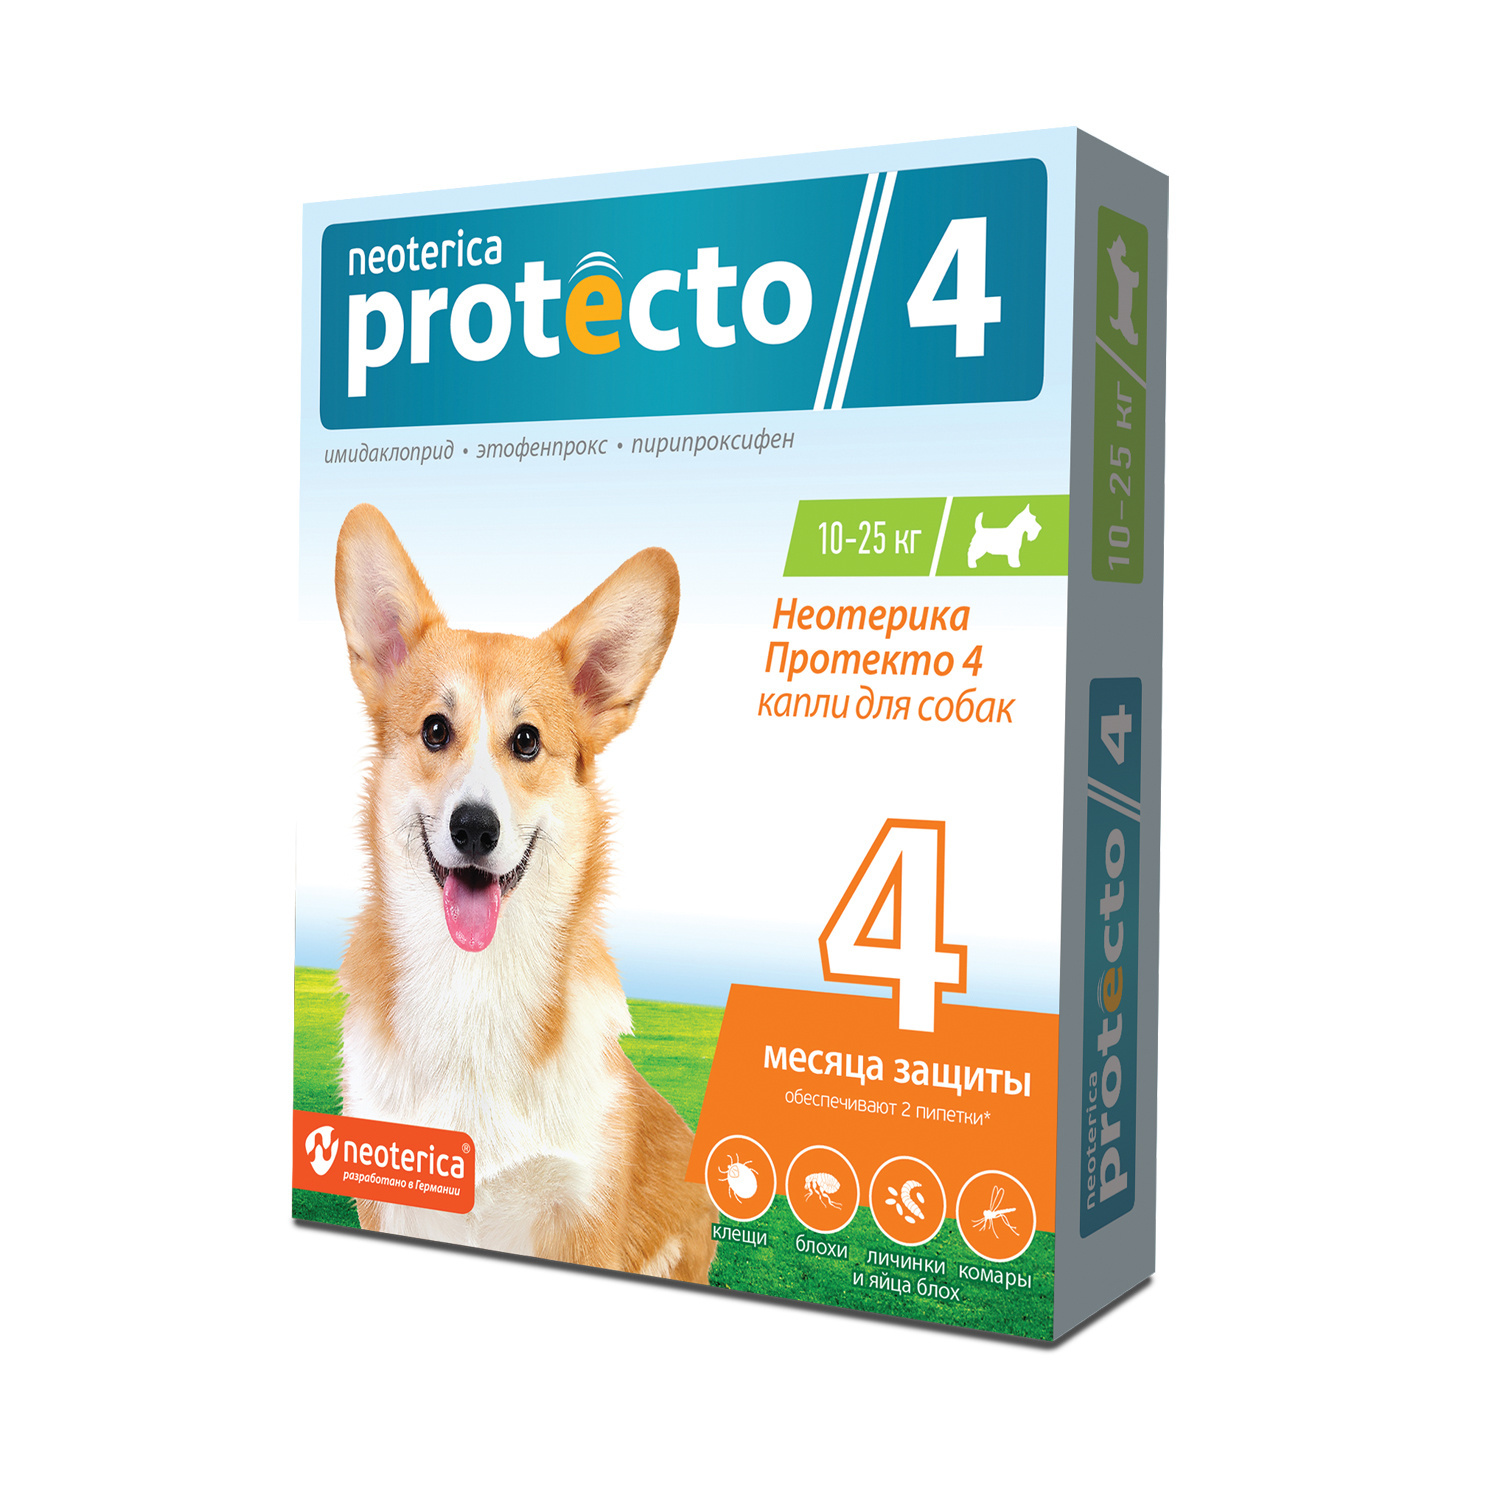 Neoterica Protecto капли от блох и клещей для собак 10-25 кг, 2 шт (59 г) Neoterica Protecto капли от блох и клещей для собак 10-25 кг, 2 шт (59 г) - фото 1